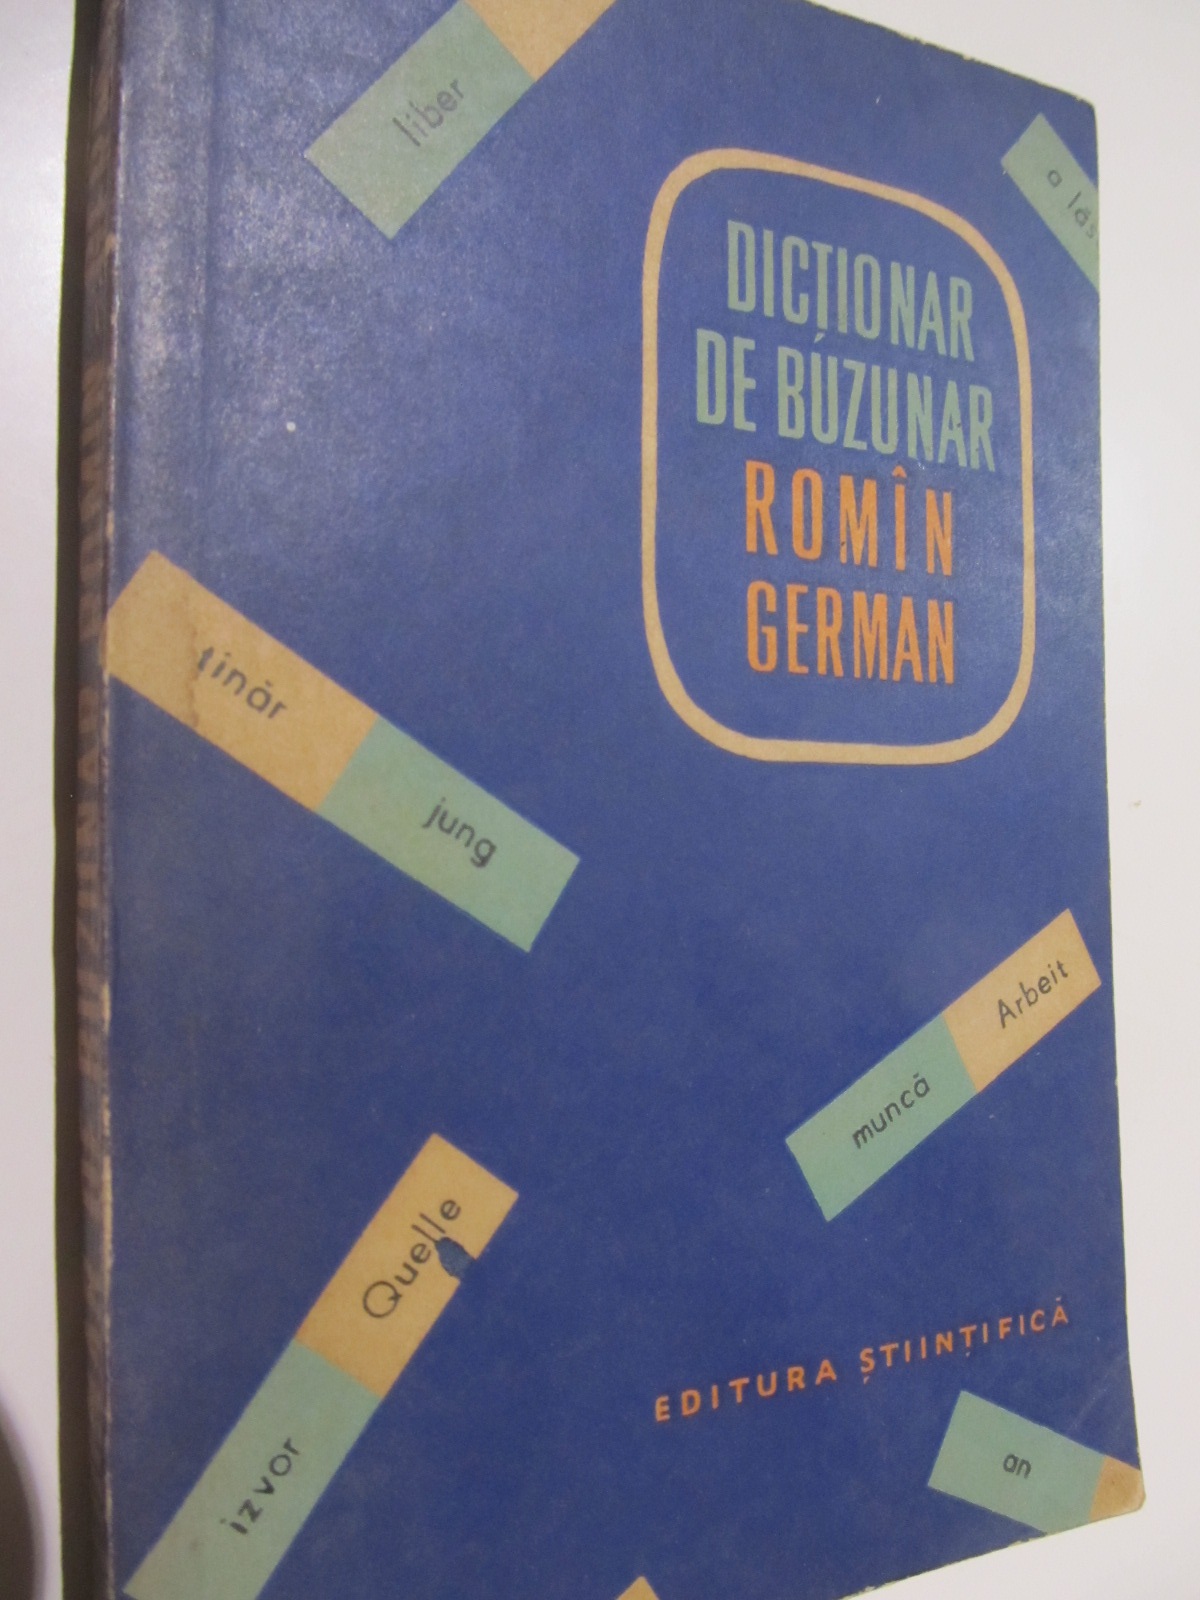 Dictionar de buzunar Roman German - Mihai Isbasescu | Detalii carte